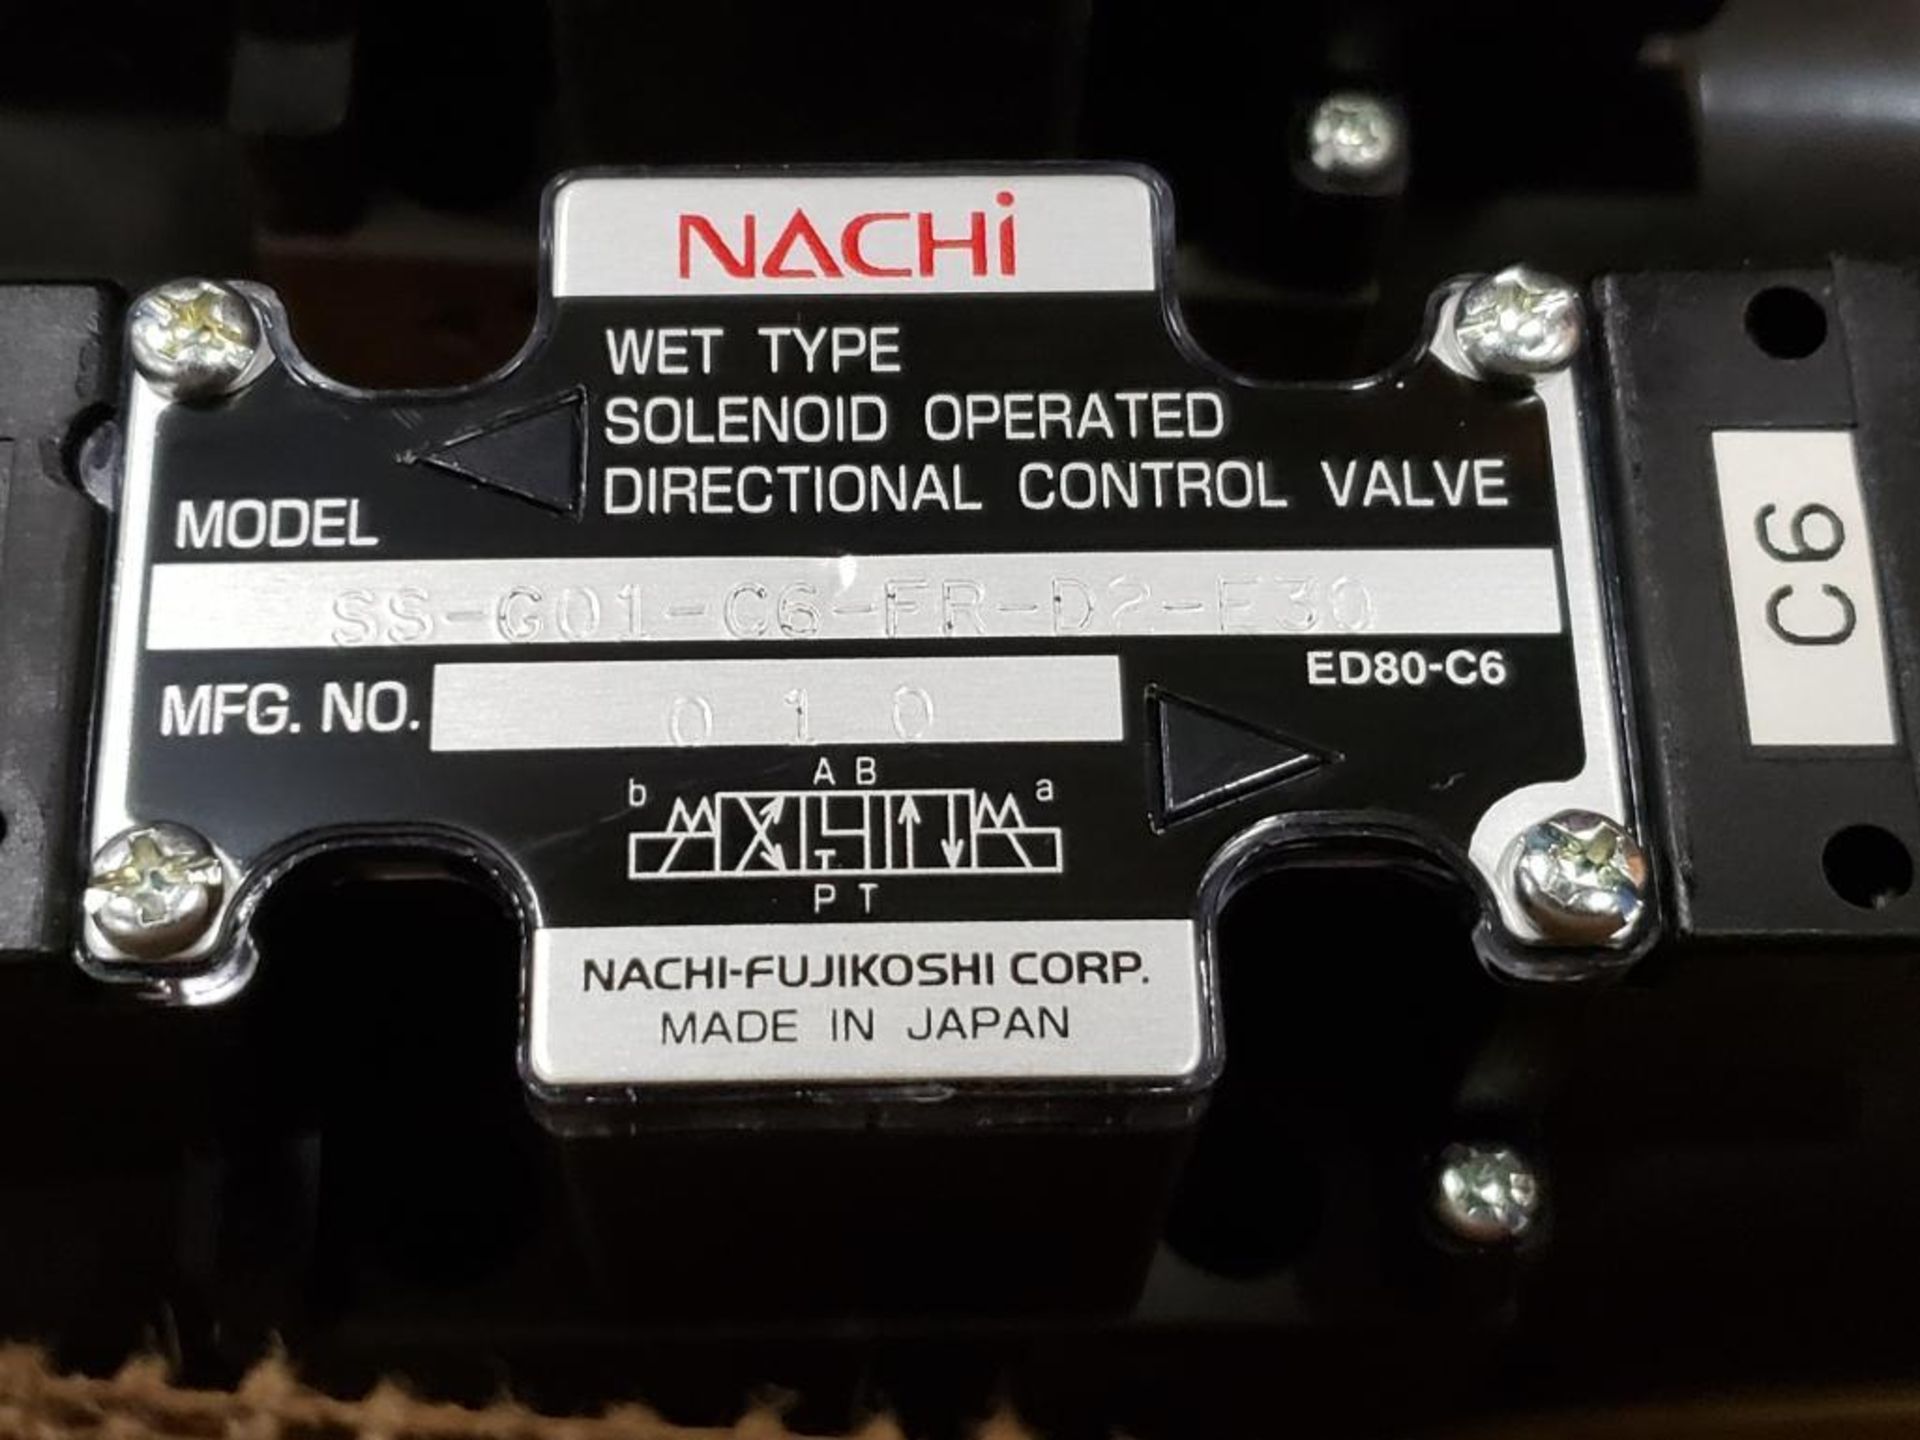 Qty 2 - Nachi SS-G01-C6-FR-D2-F30 solenoid control valve. - Image 2 of 3